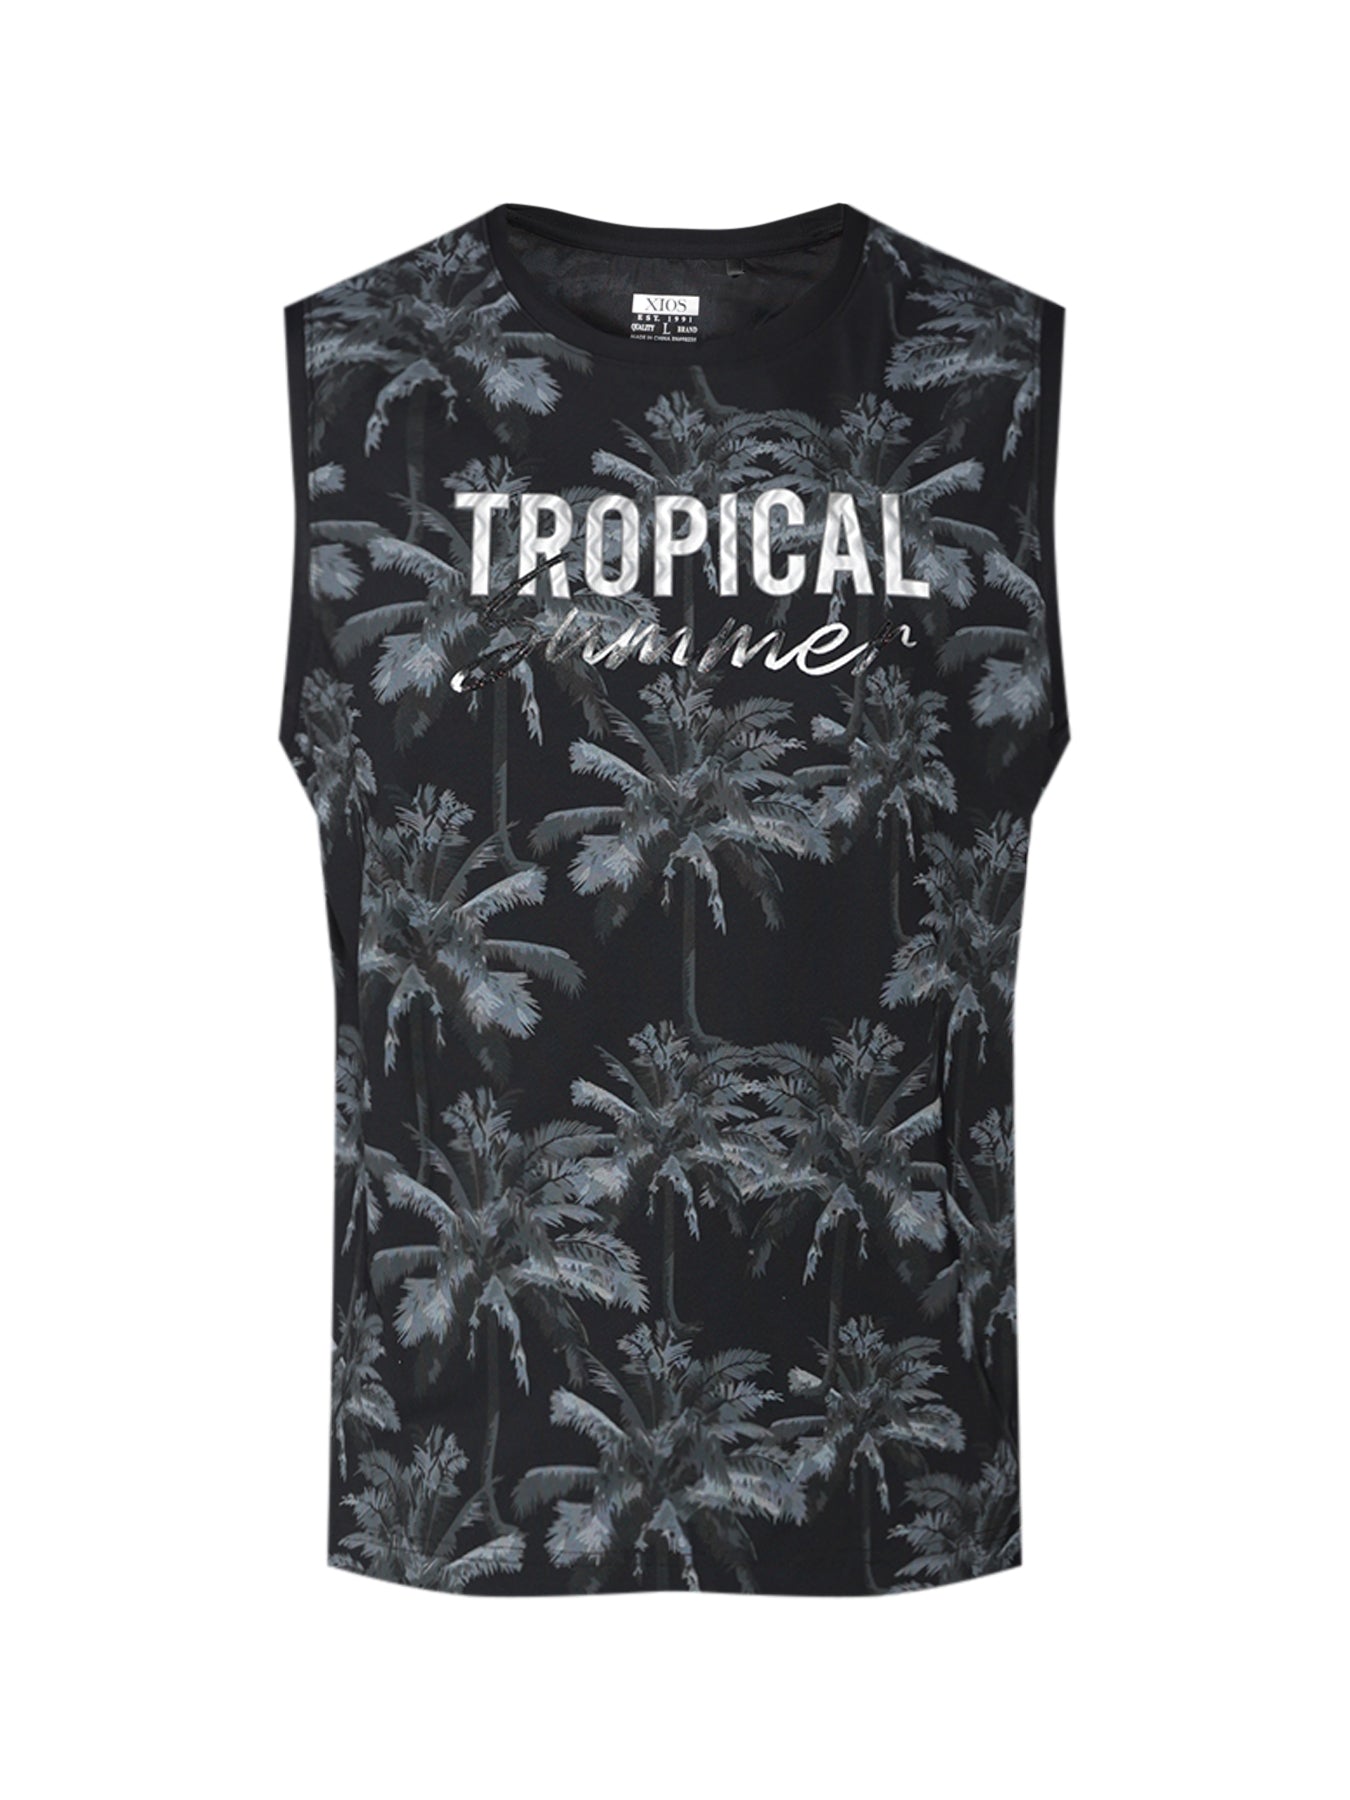 "Tropical Summer" Muscle Shirt - XIOS America